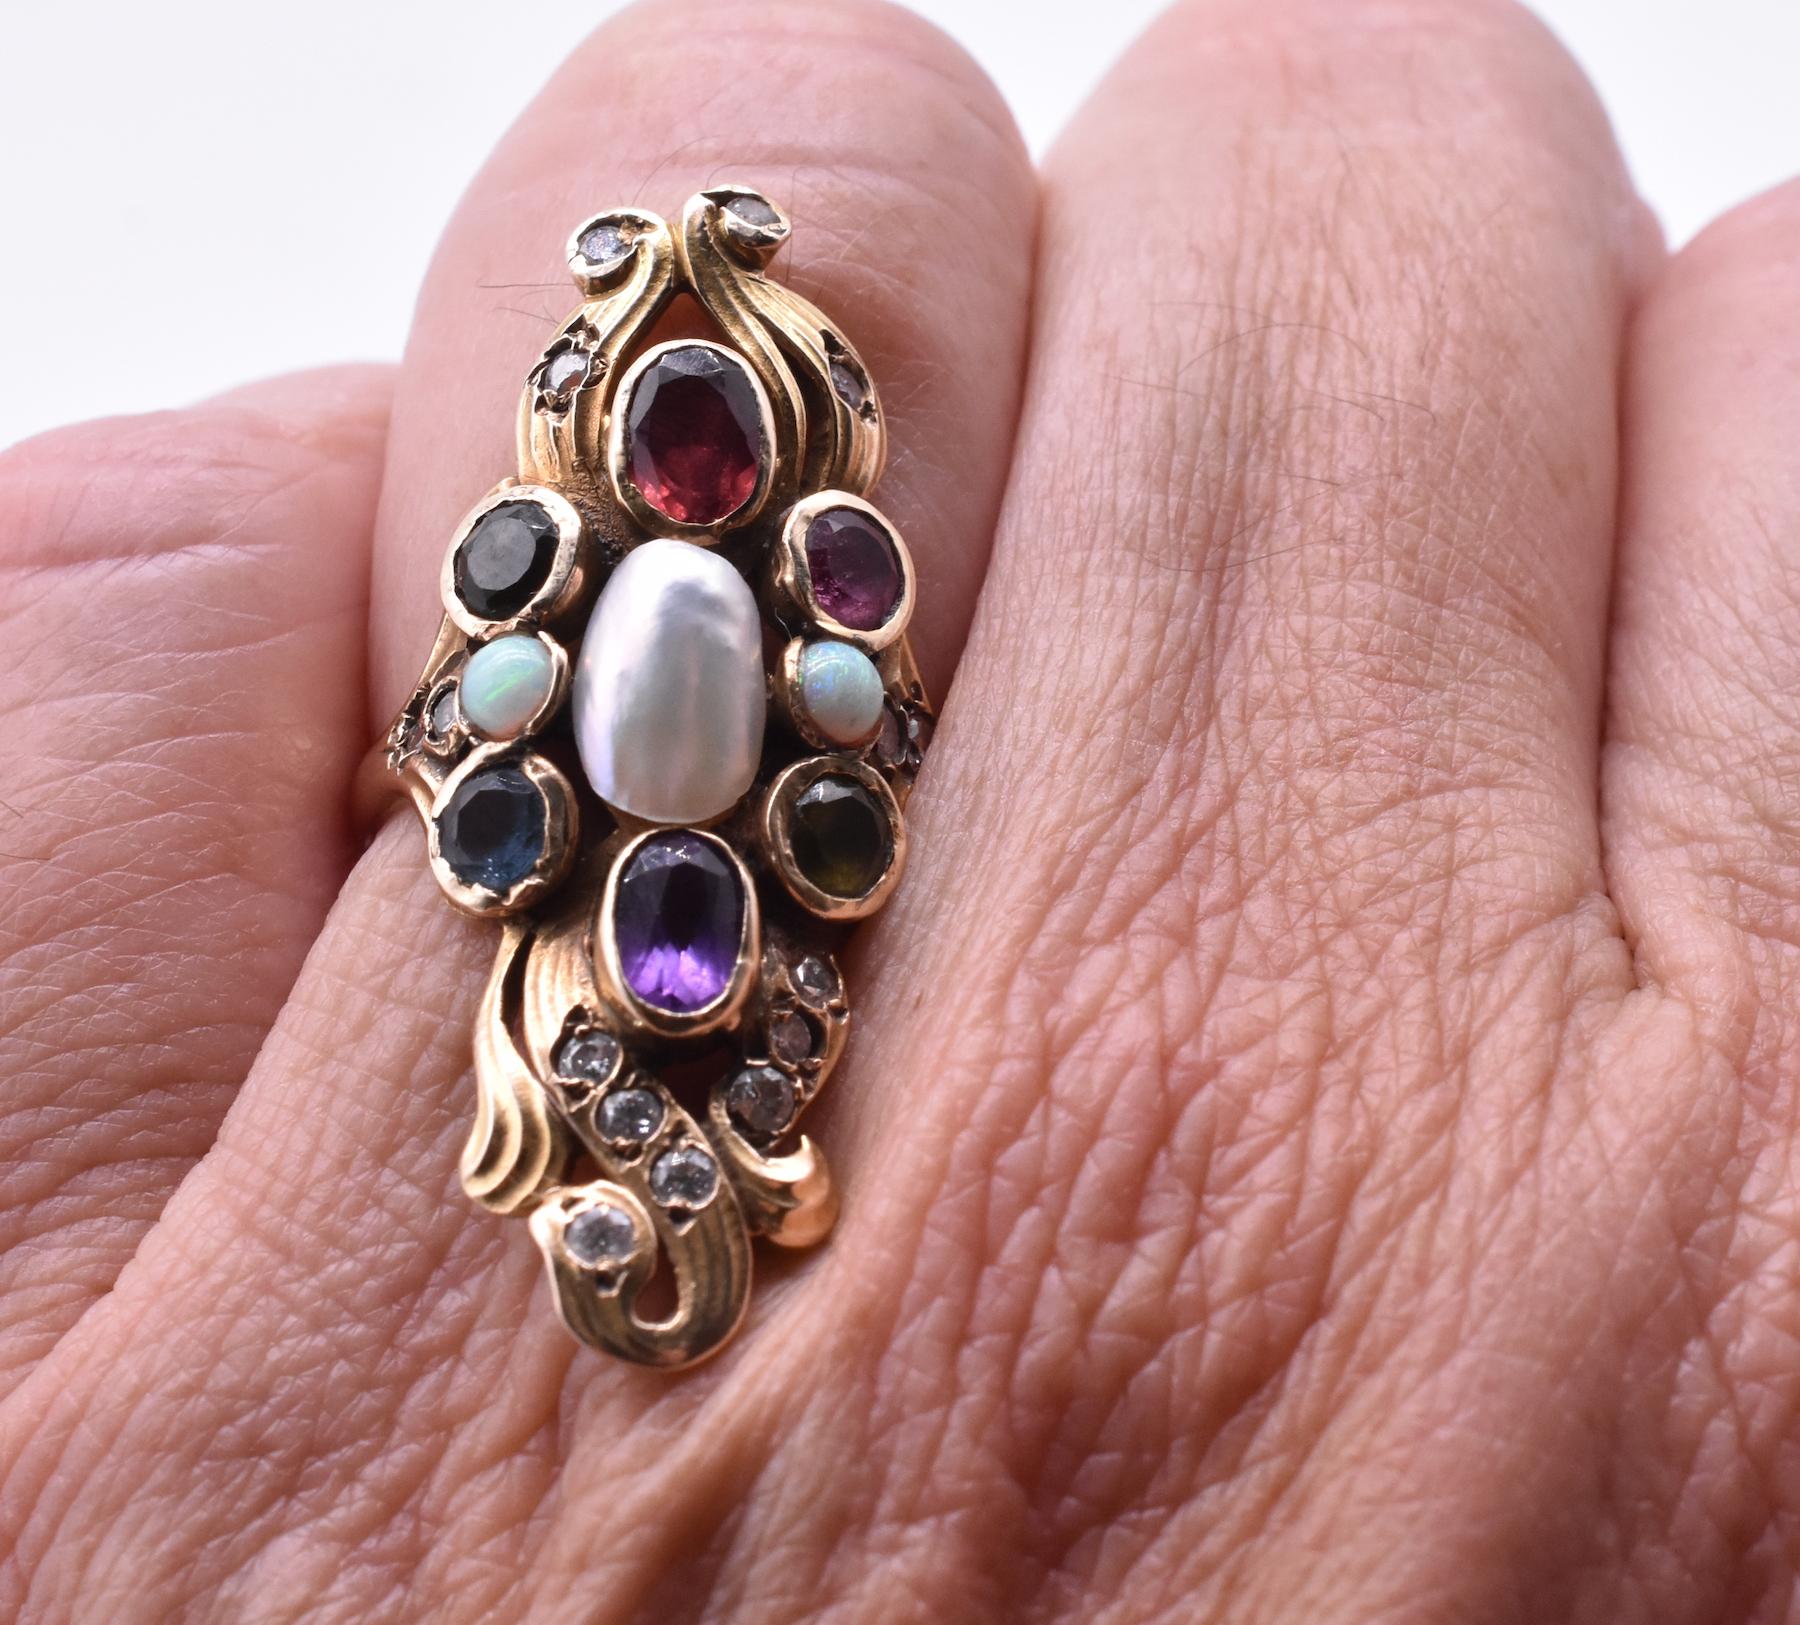 14 Karat American Art Nouveau Ring with Diamonds and Semi Precious Stones 1